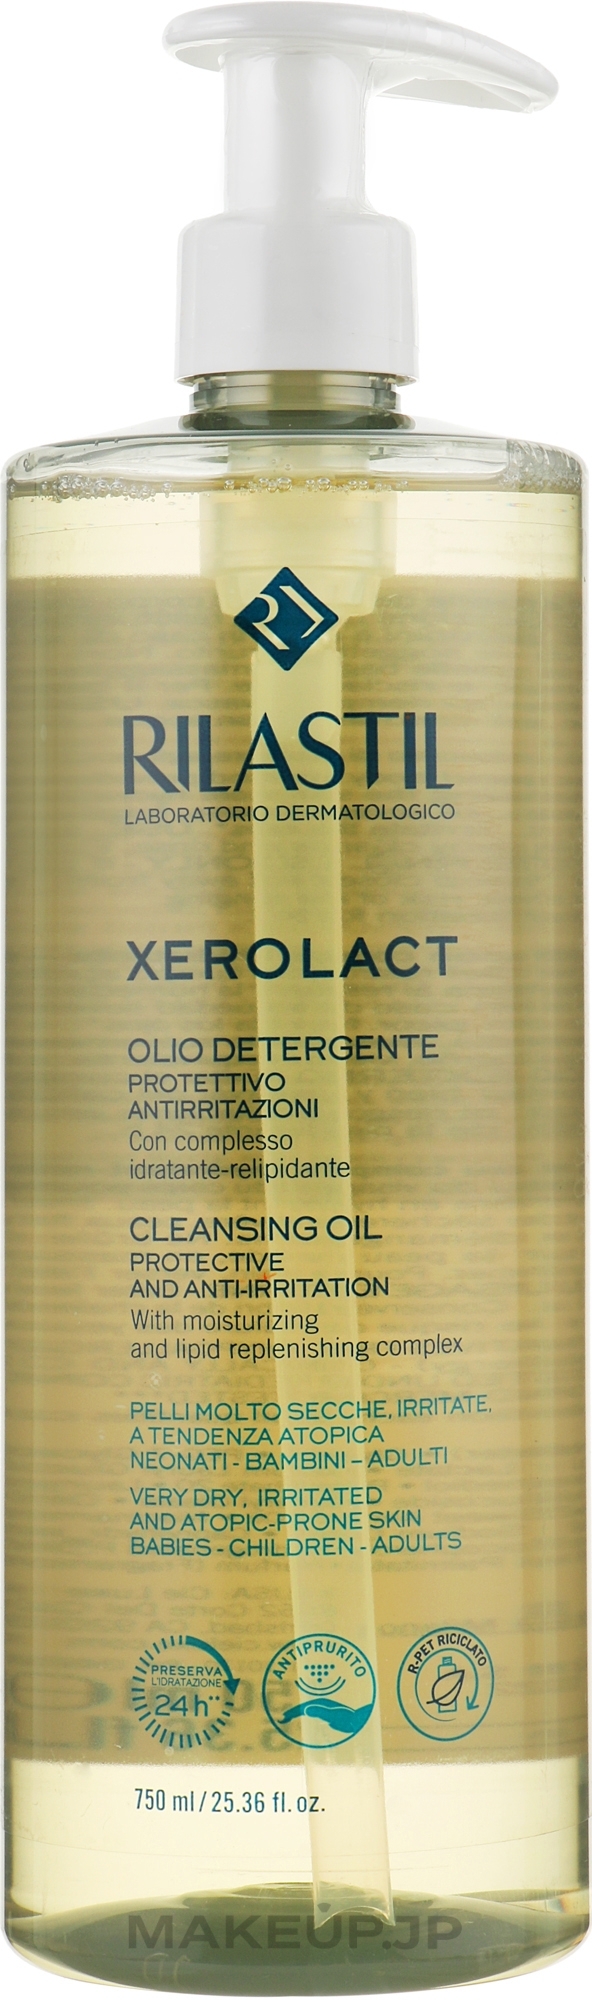 Face & Body Cleansing Oil for Extra Dry & Irritation-Prone Skin - Rilastil Xerolact Cleansing Oil — photo 750 ml